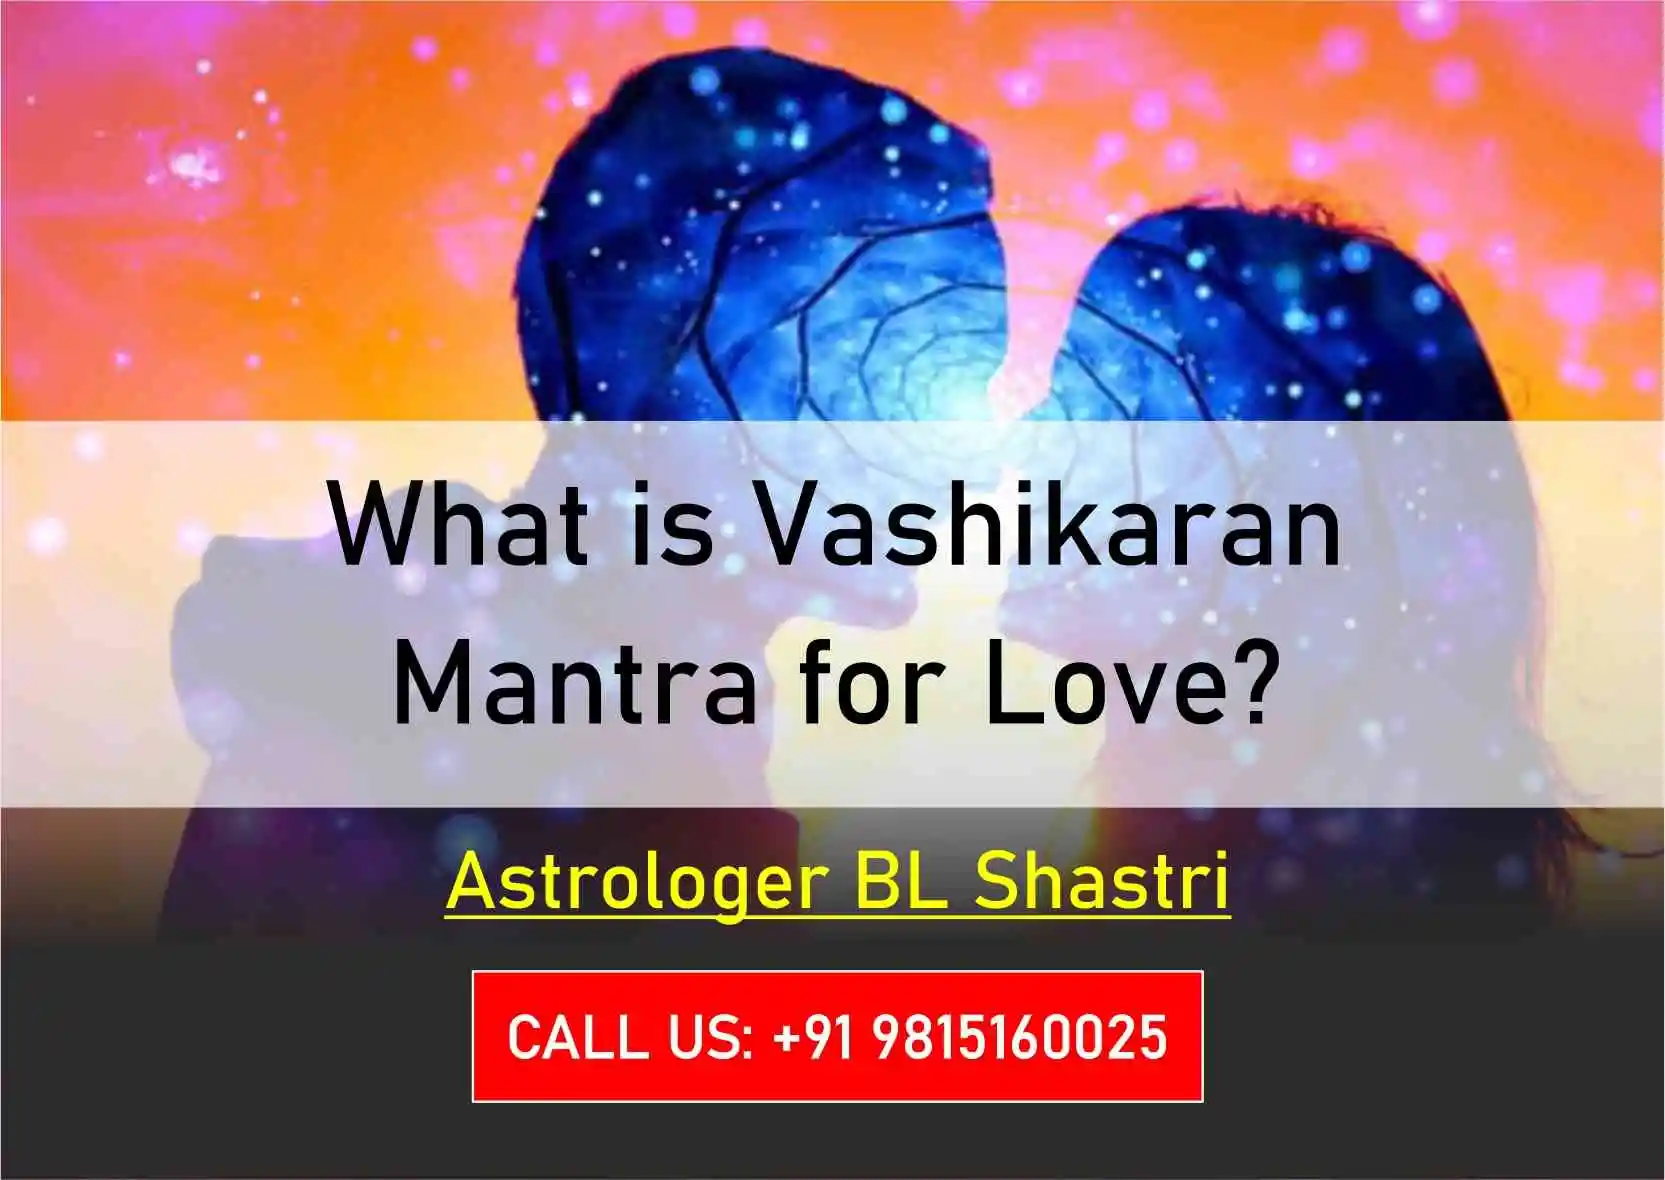 What is Vashikaran Mantra for Love?